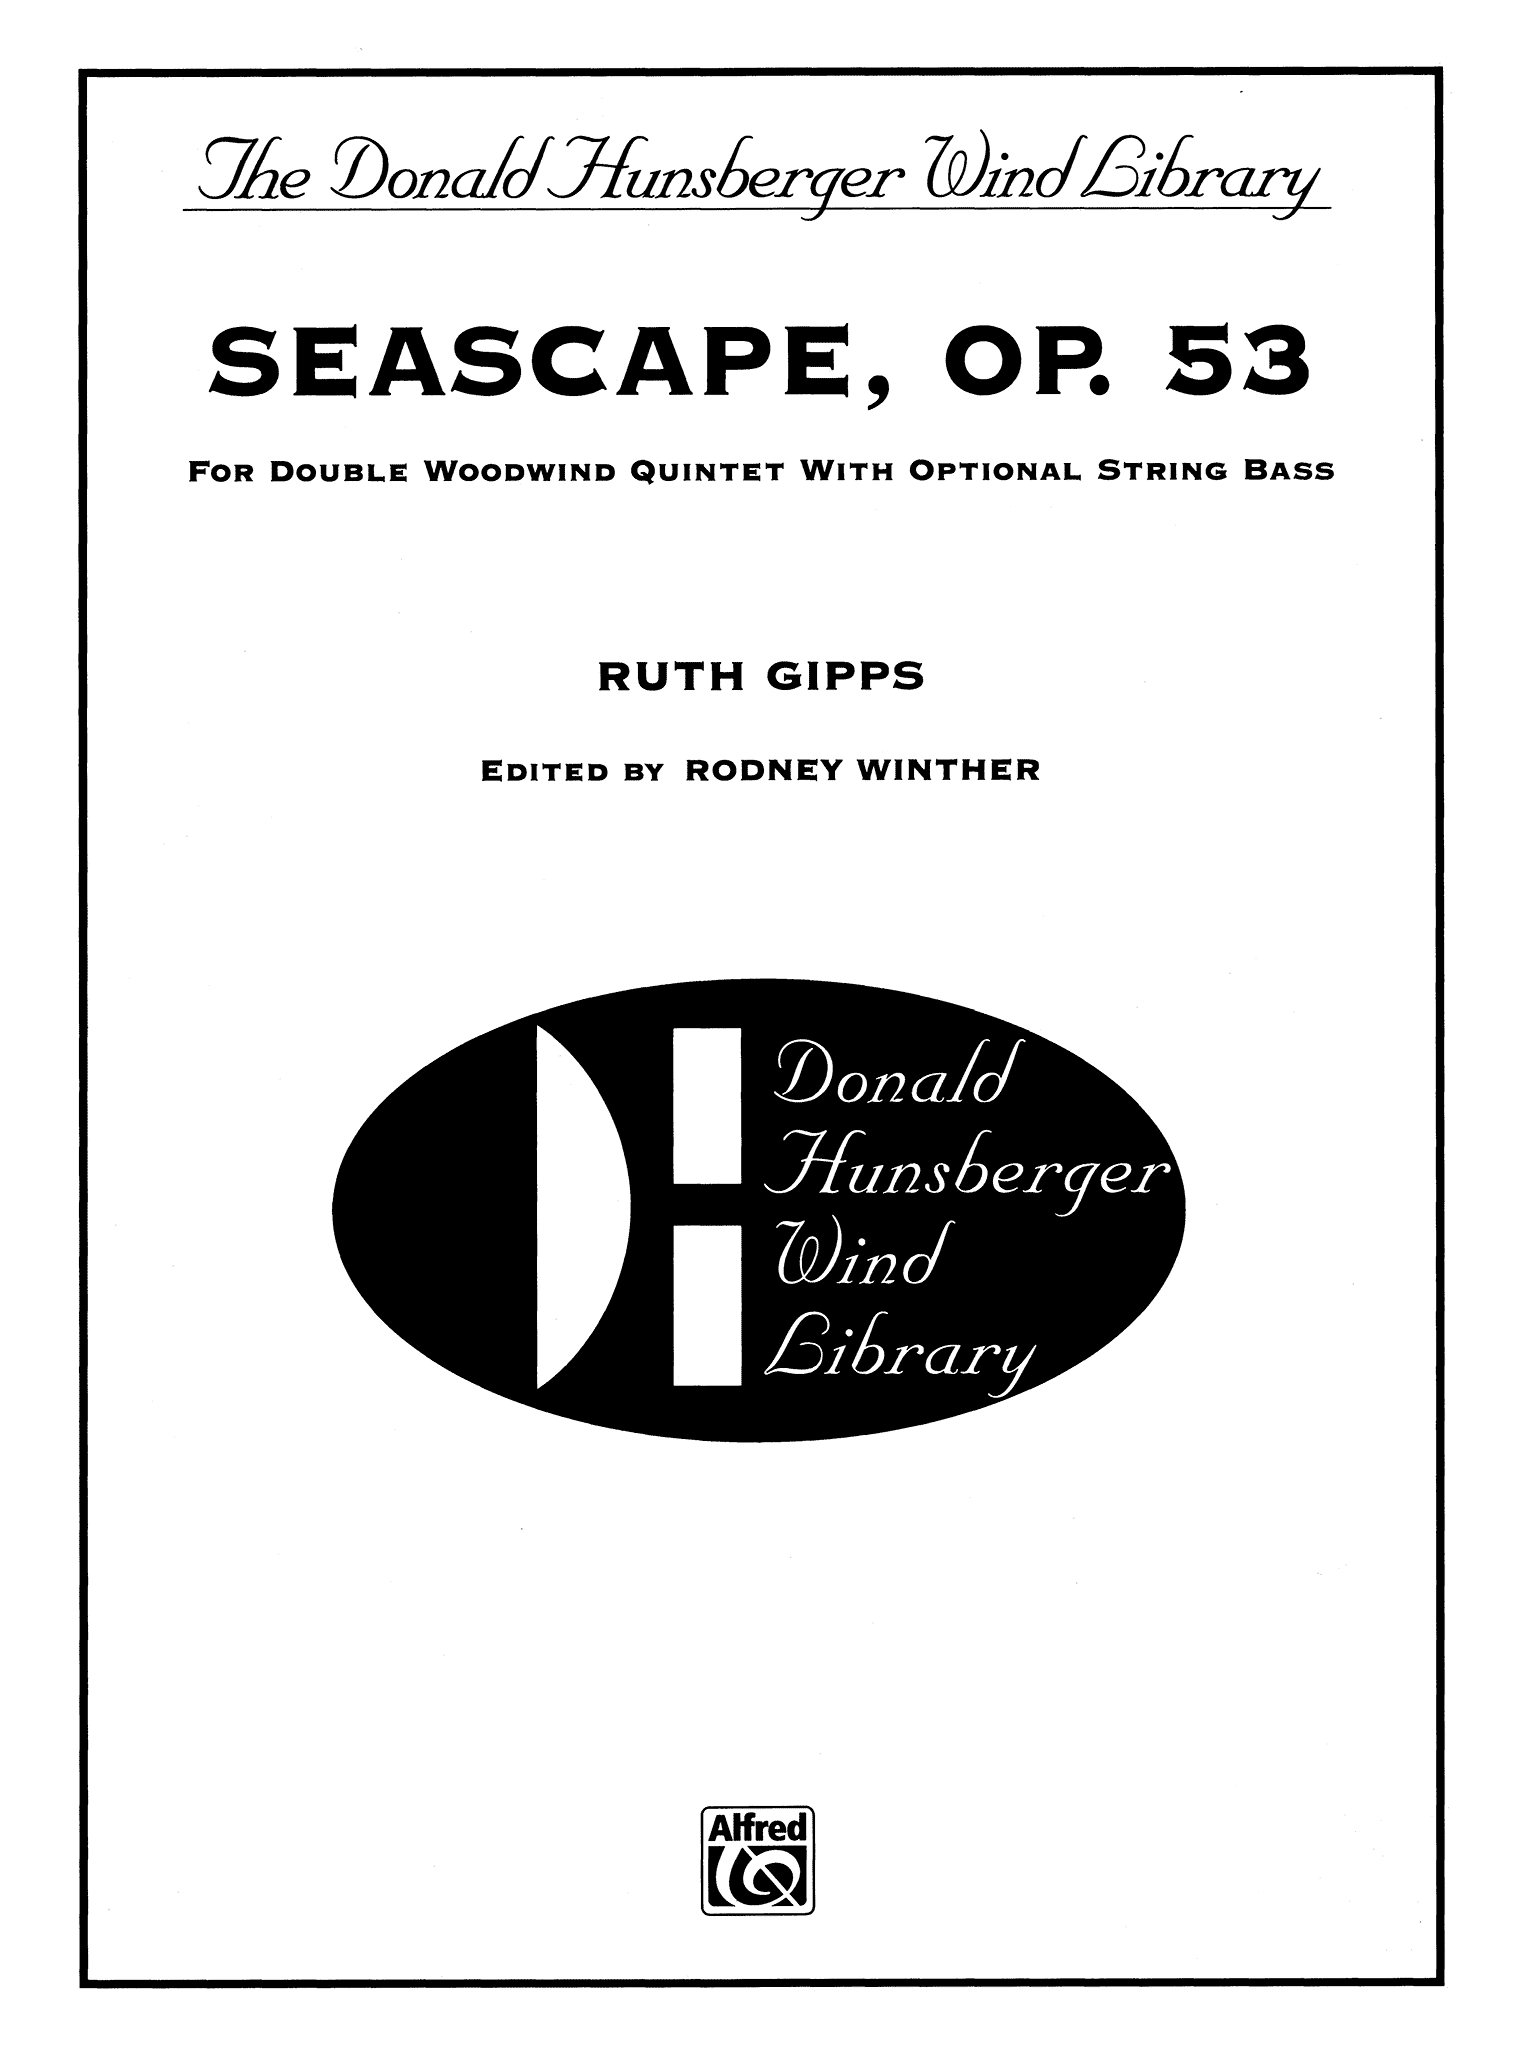 Gipps Seascape, Op. 53 double wind quintet score cover